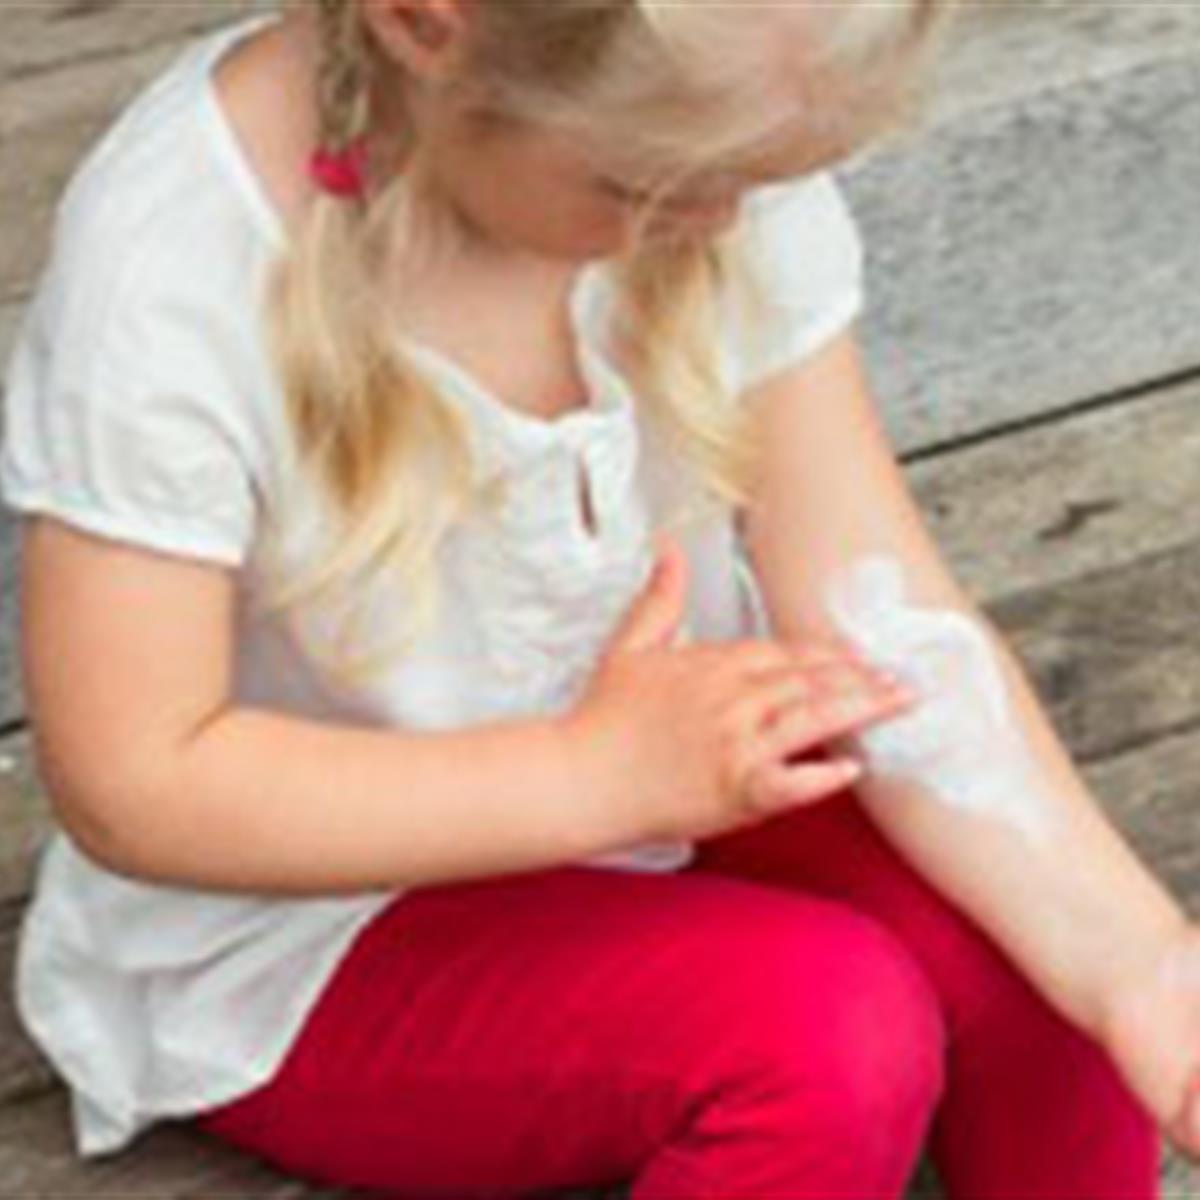 Eczema in Babies and Children - HealthyChildren.org